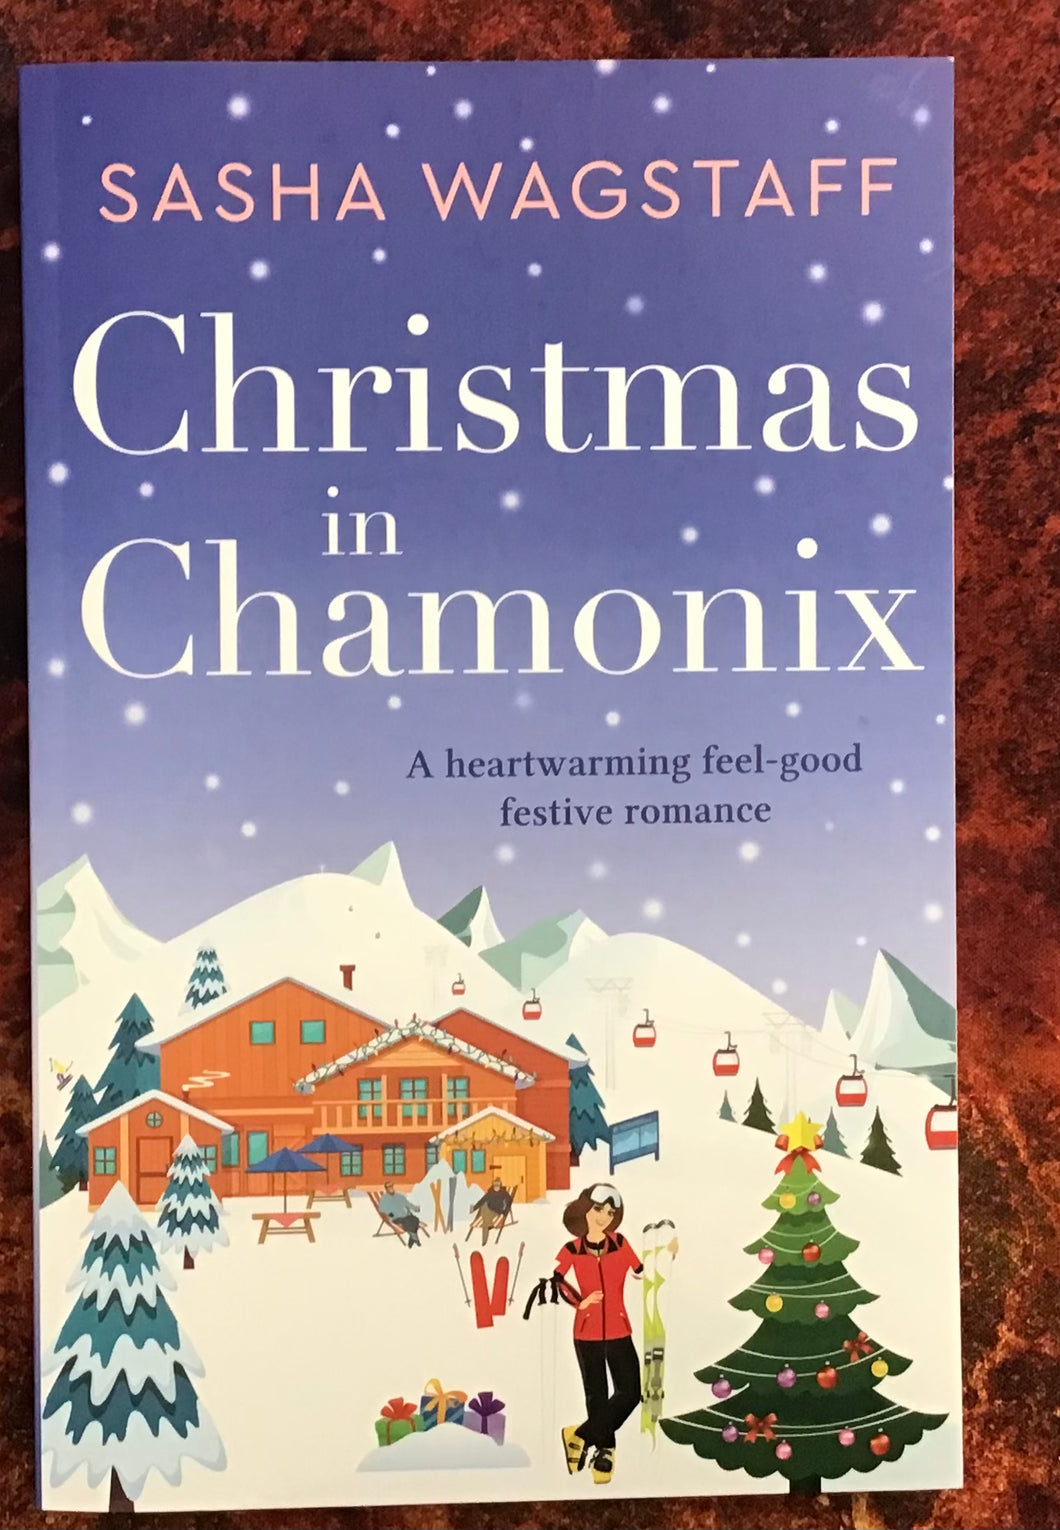 Christmas in Chamonix, by Sasha Wagstaff